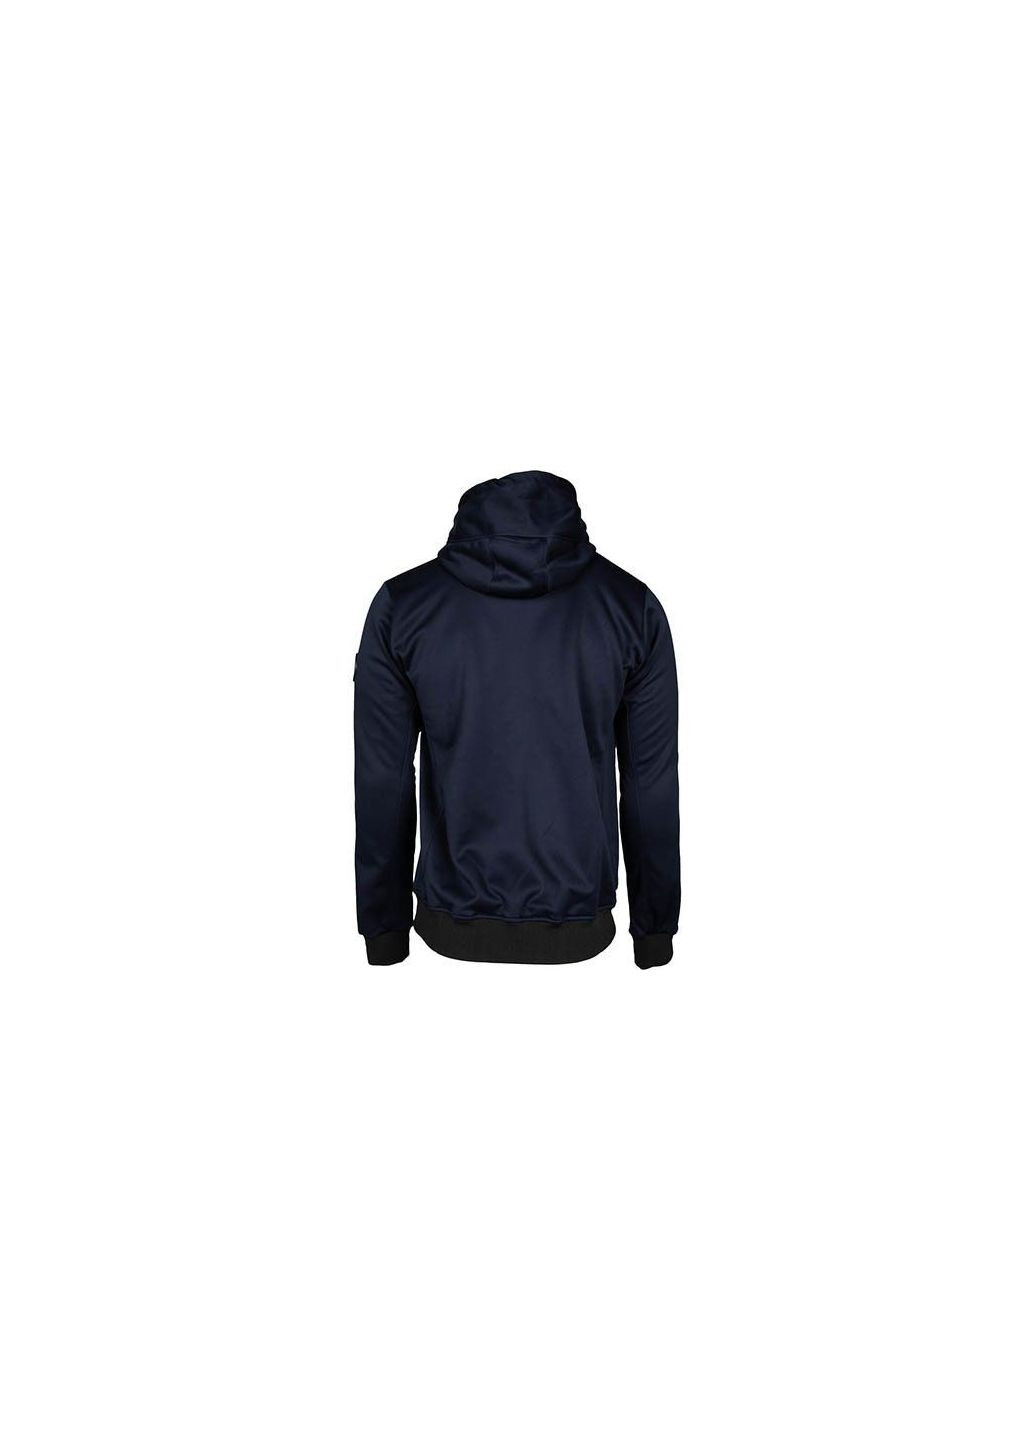 Куртка Glendale oftshell Jacket S Темно-синий (06369229) Gorilla Wear (293254131)